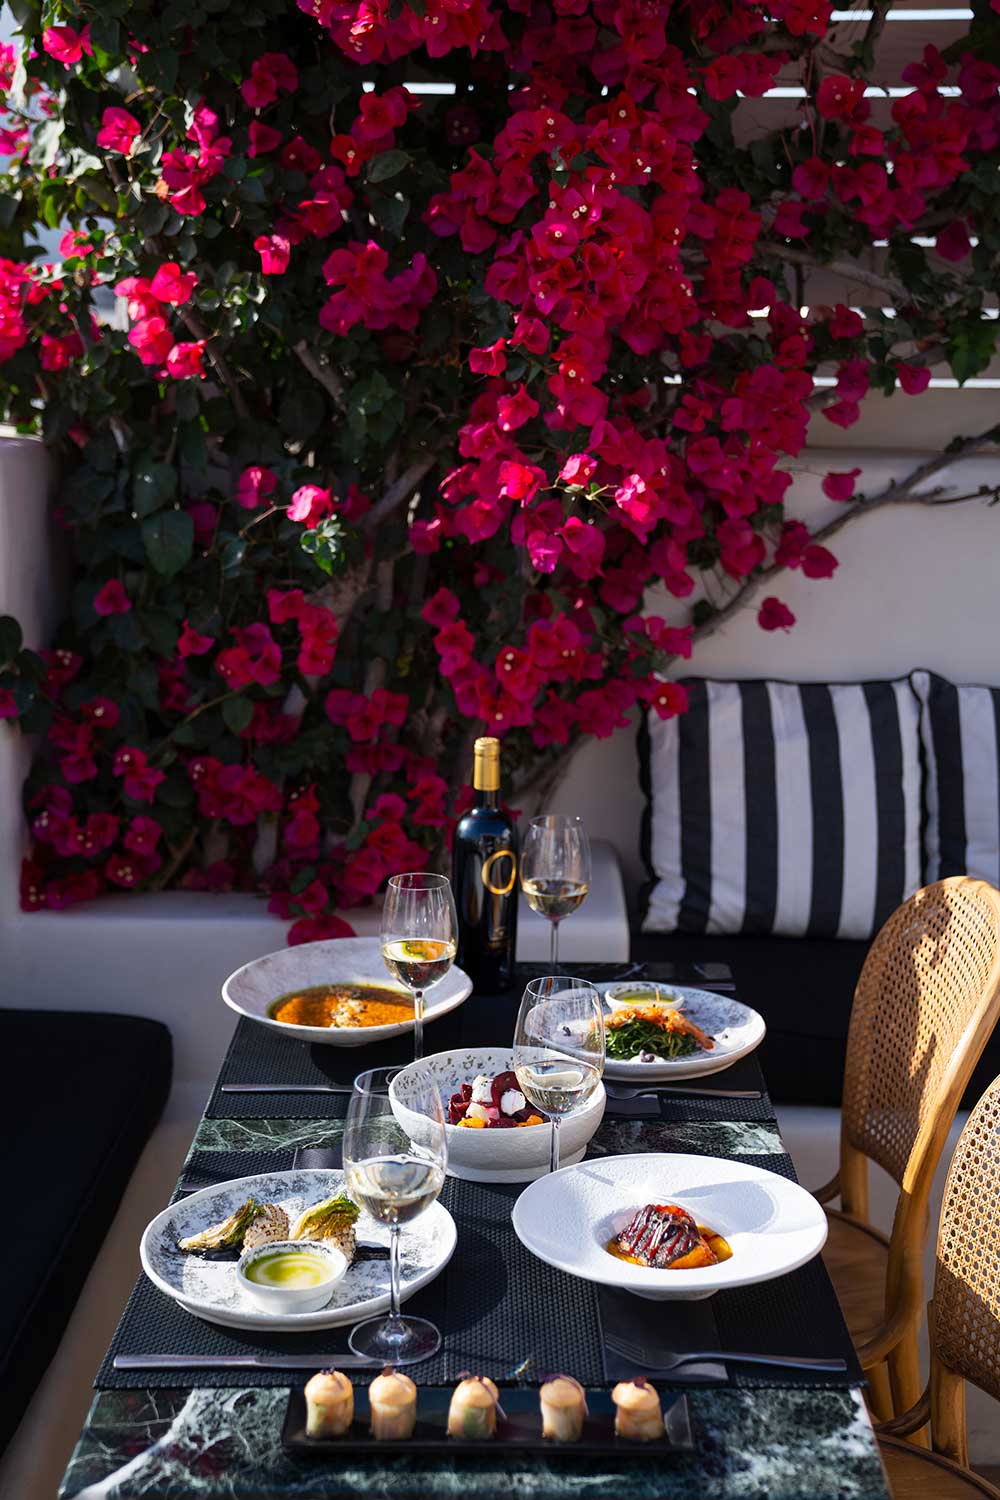 Santorini's Must-Visit Food Destination: Fino Restaurant, Where Mediterranean Cuisine Meets Artistry and Innovation